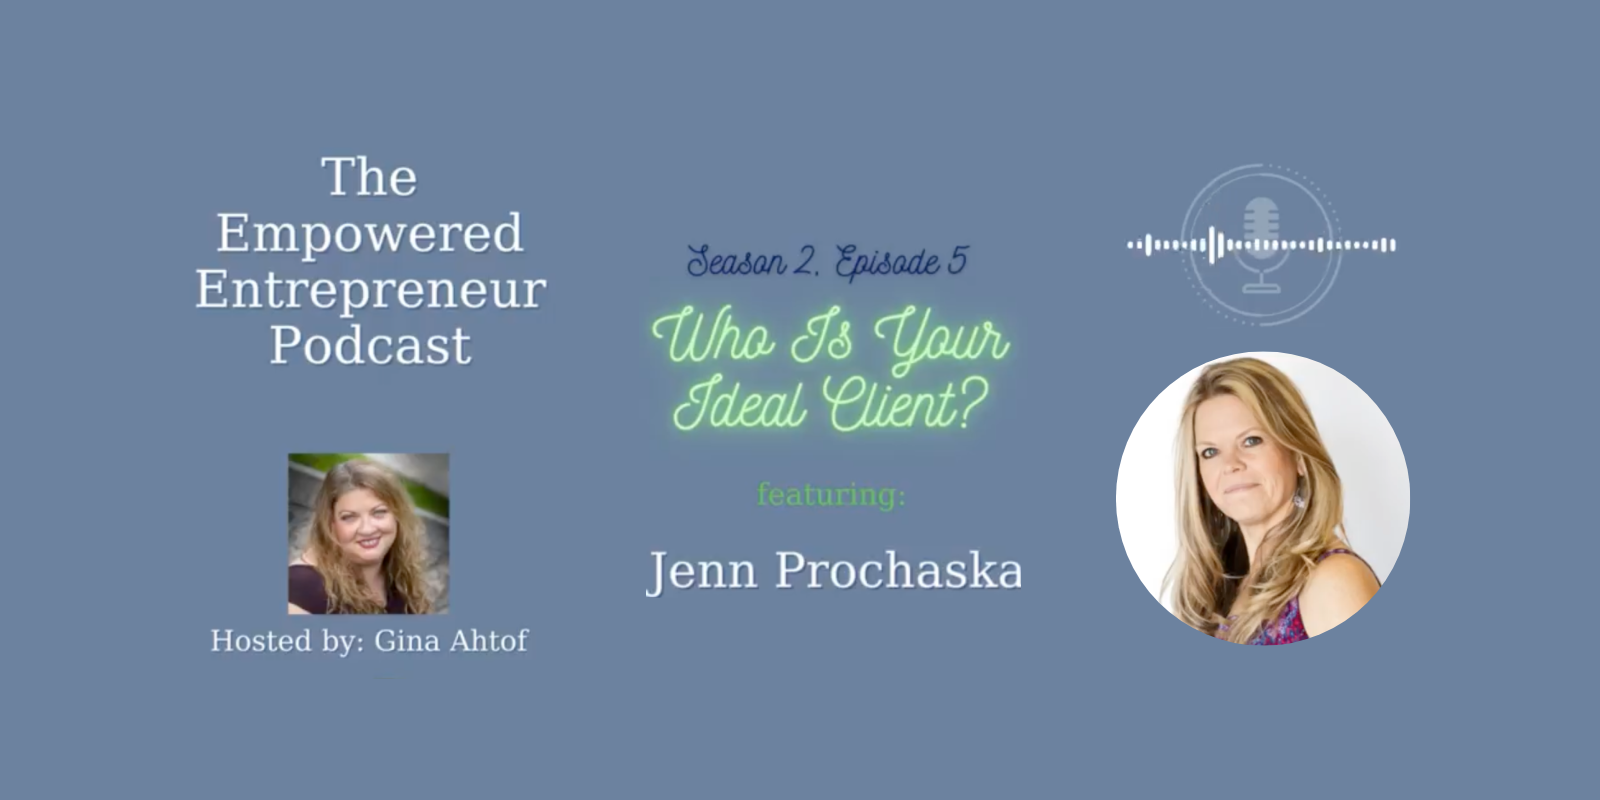 Podcast: The Empowered Entrepreneur